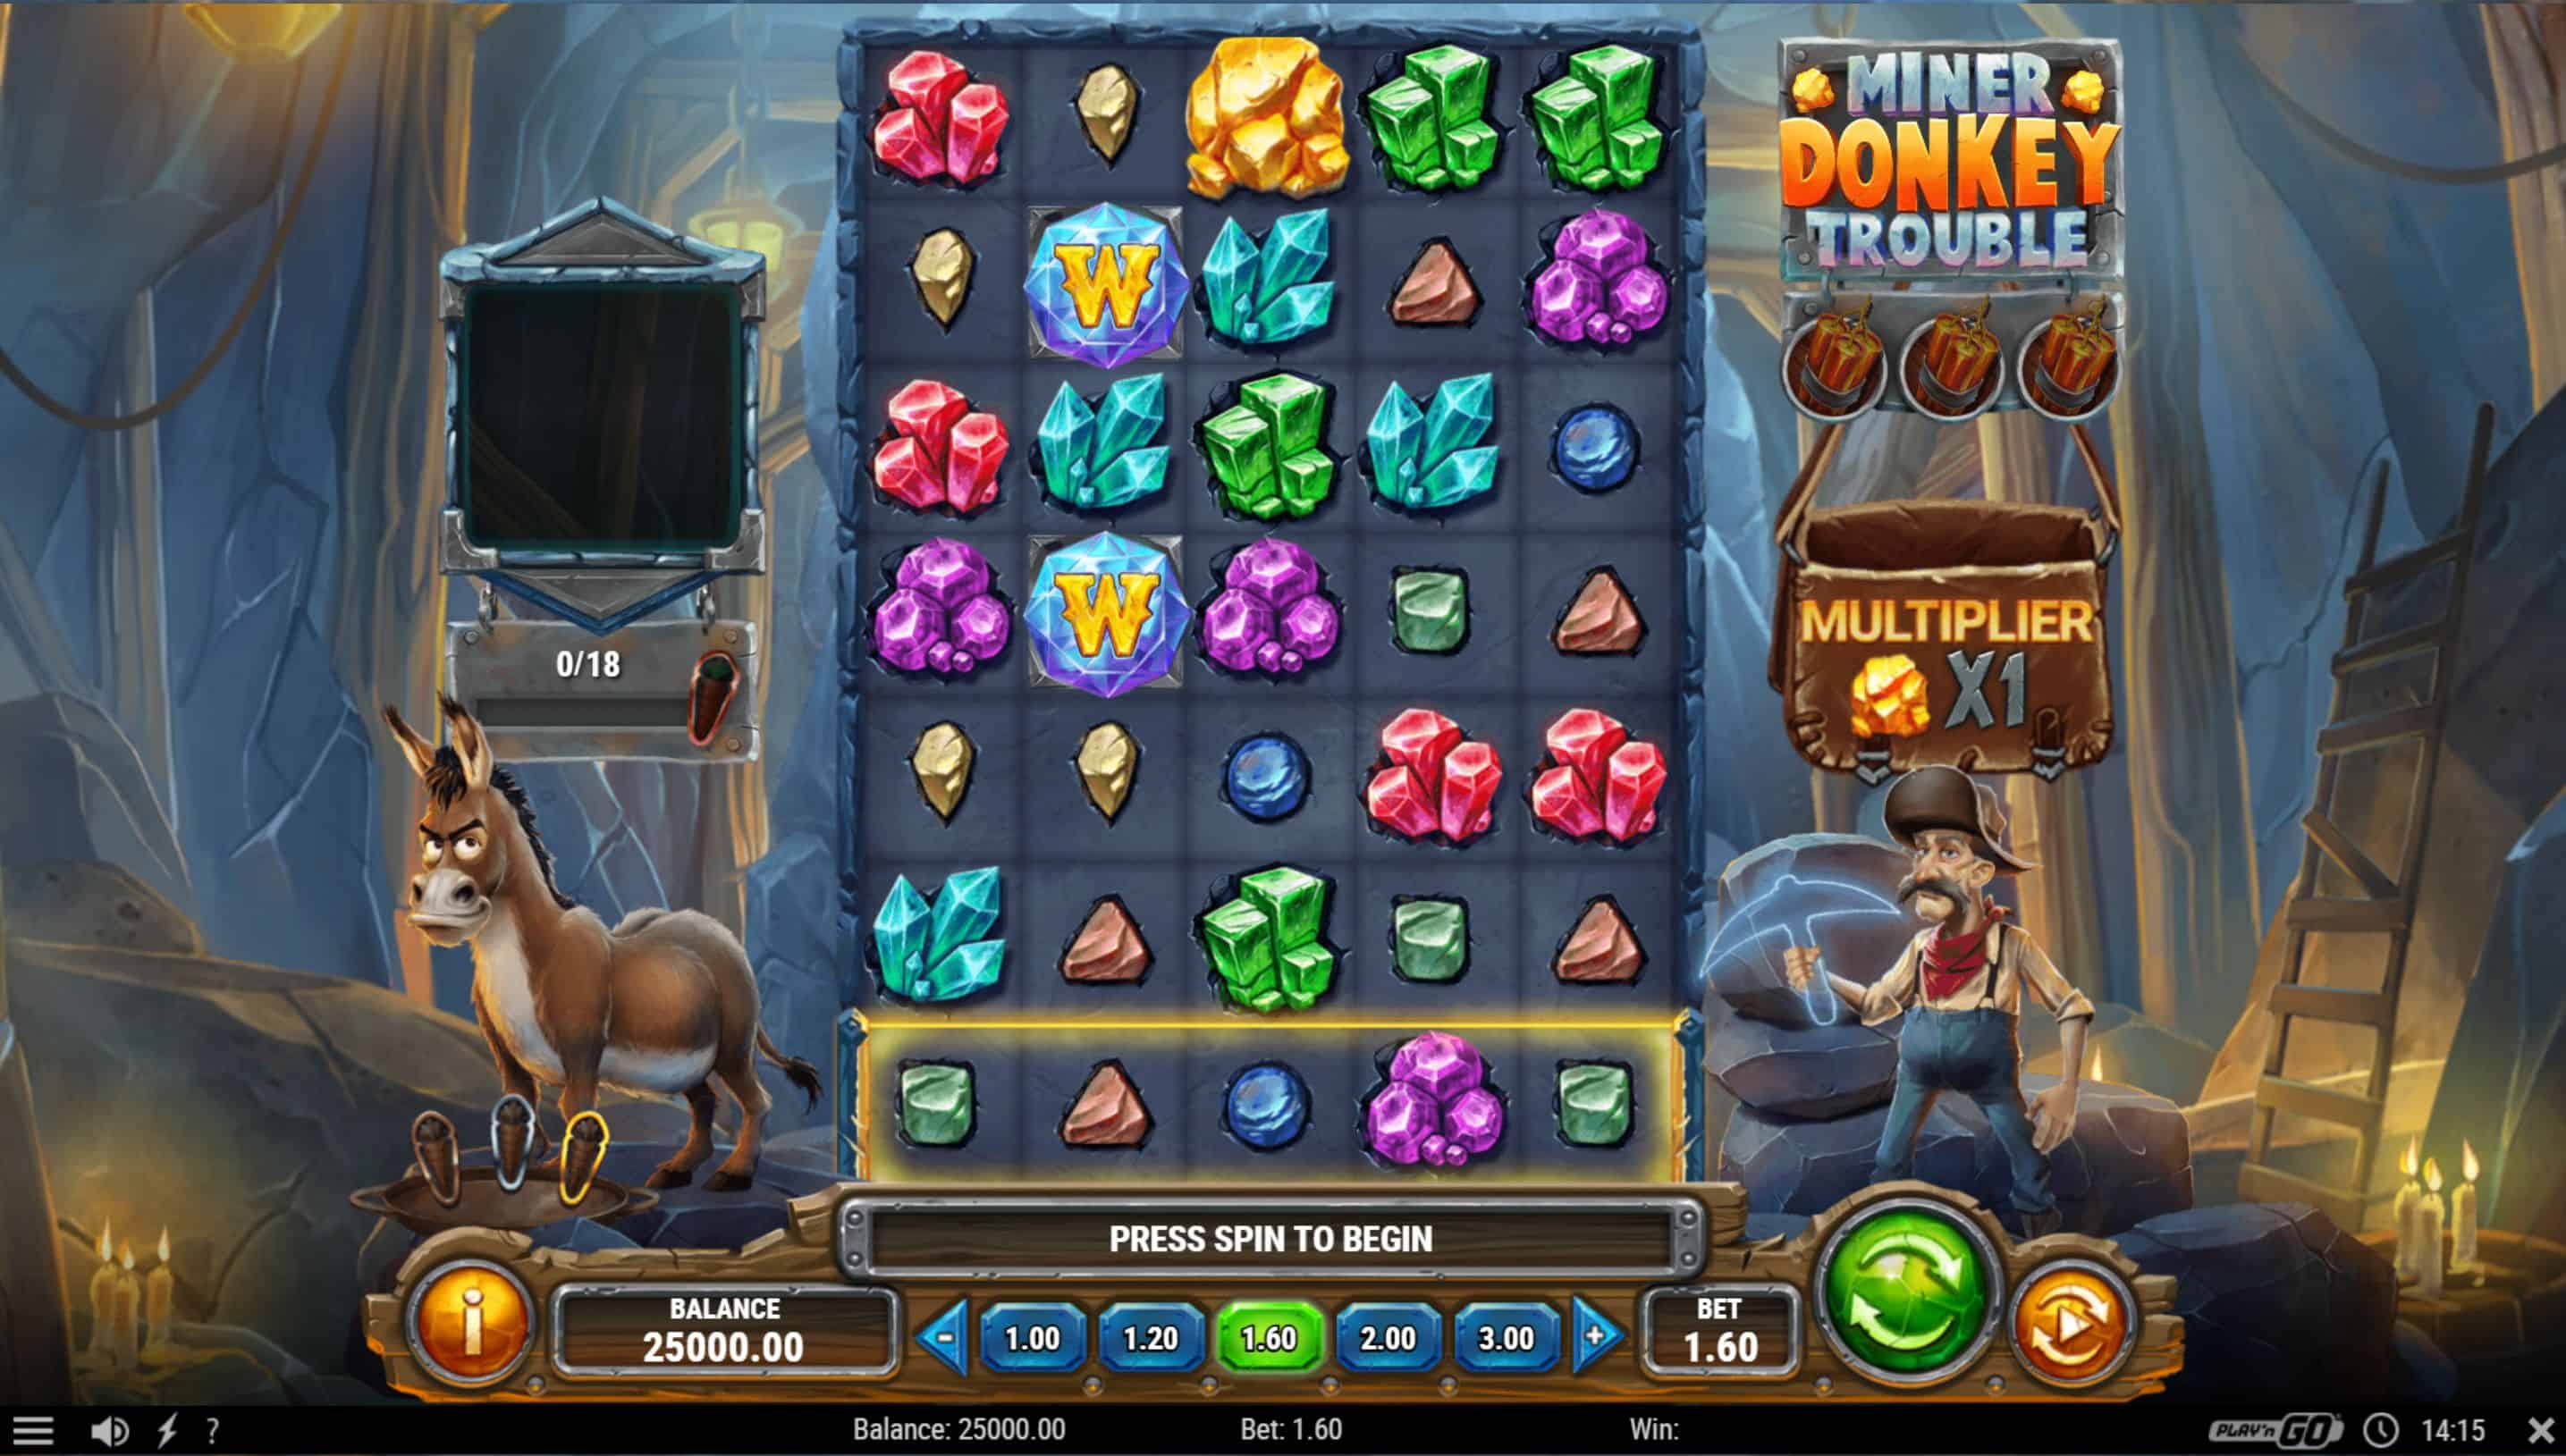 Miner Donkey Trouble Slot Game Free Play at Casino Ireland 01